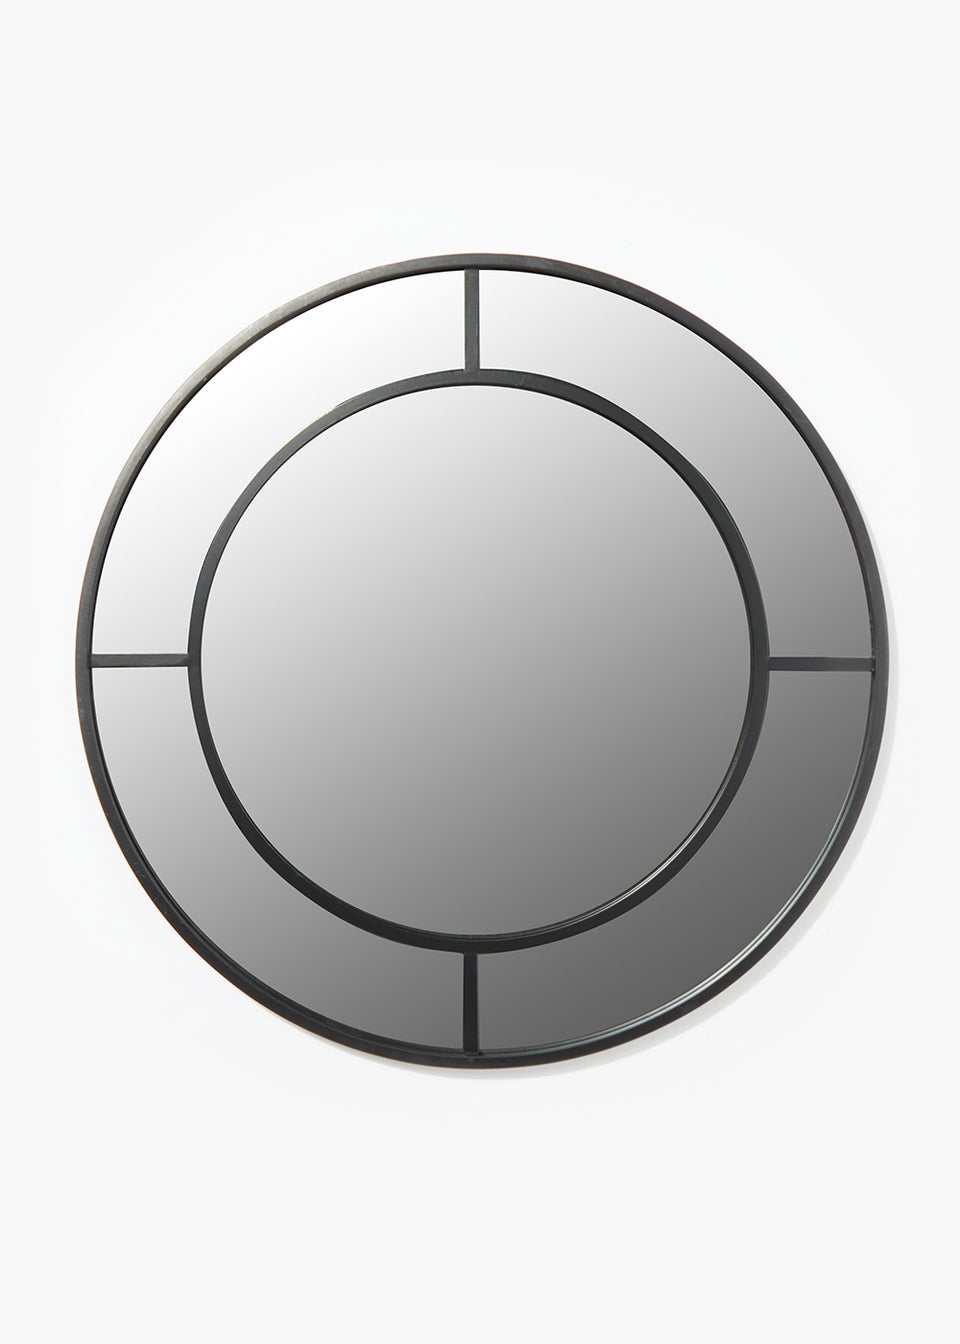 Circle Mirror with Black Panes (60cm x 60cm)